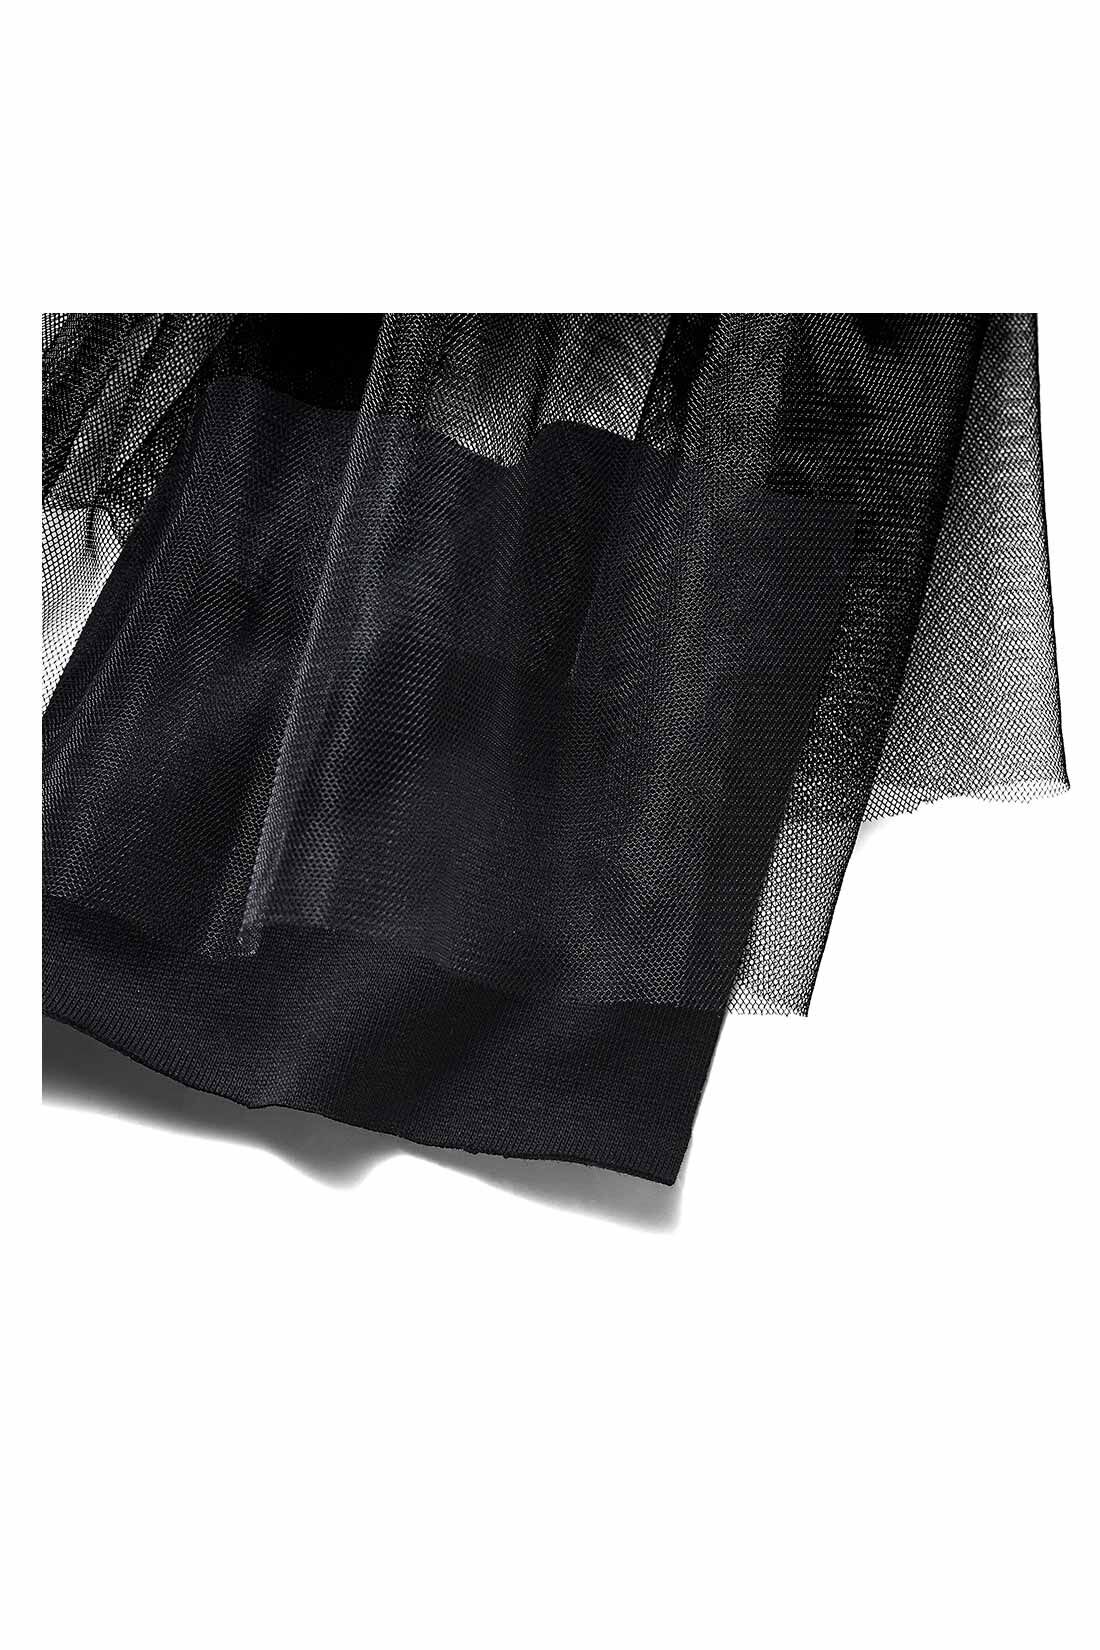 MEDE19F|MEDE19F　チュールビスチェトップスセット〈ブラック〉|綿・ポリエステル混カットソー素材と、繊細でやわらかなチュール素材の組み合わせ。